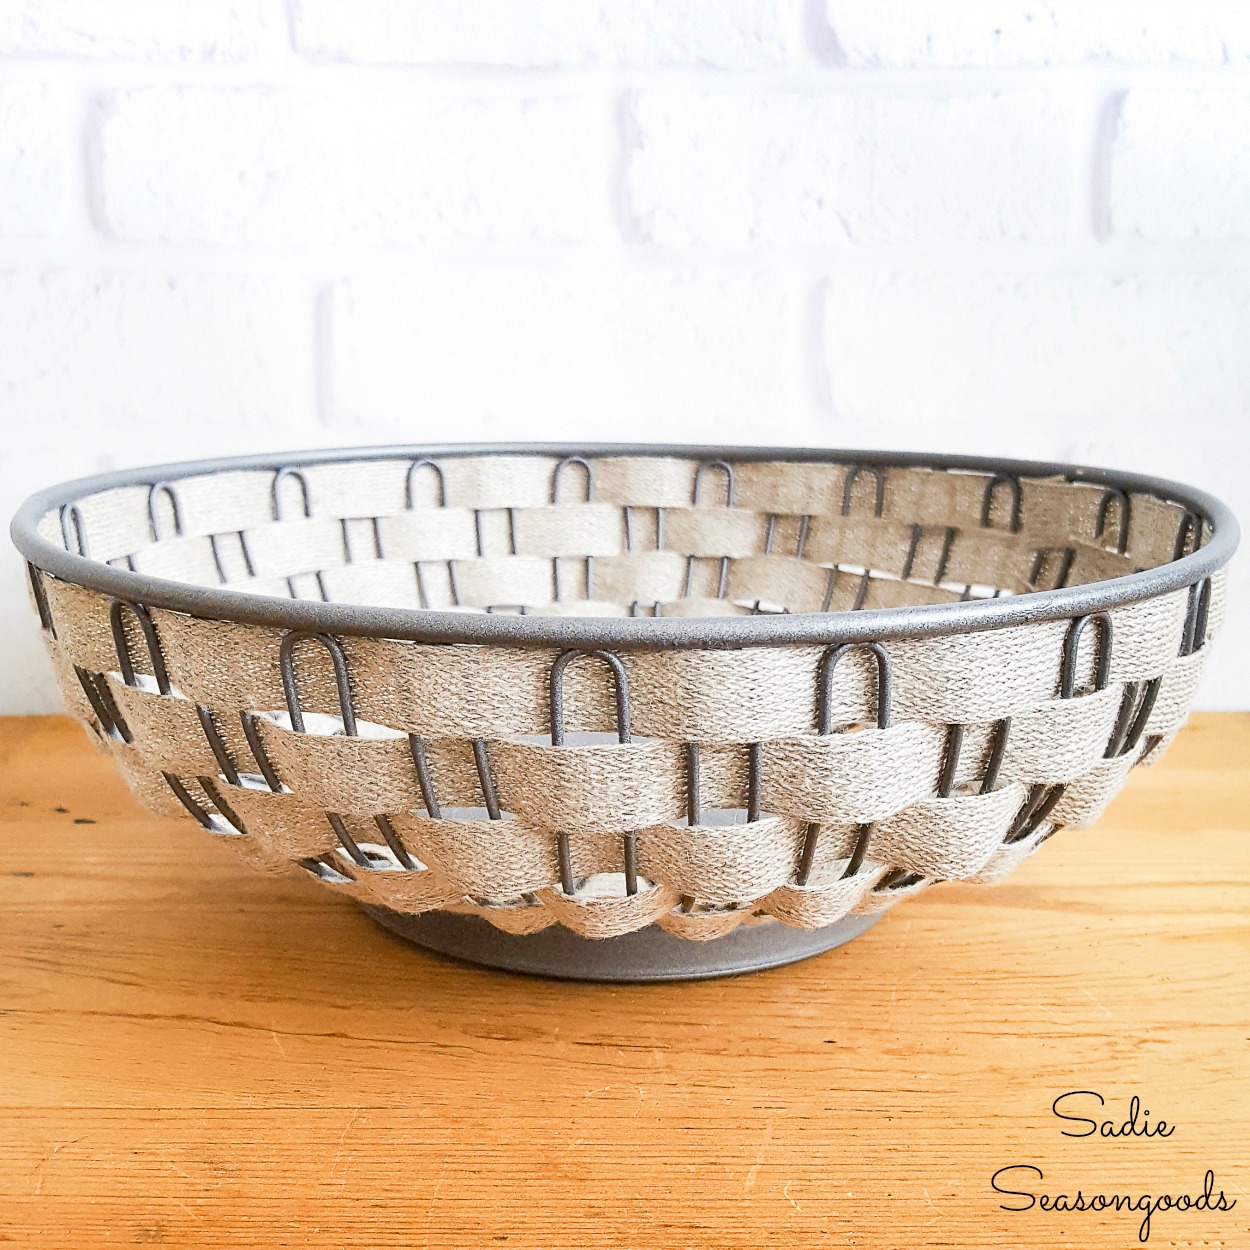 Ceramic Bread Basket with Towel